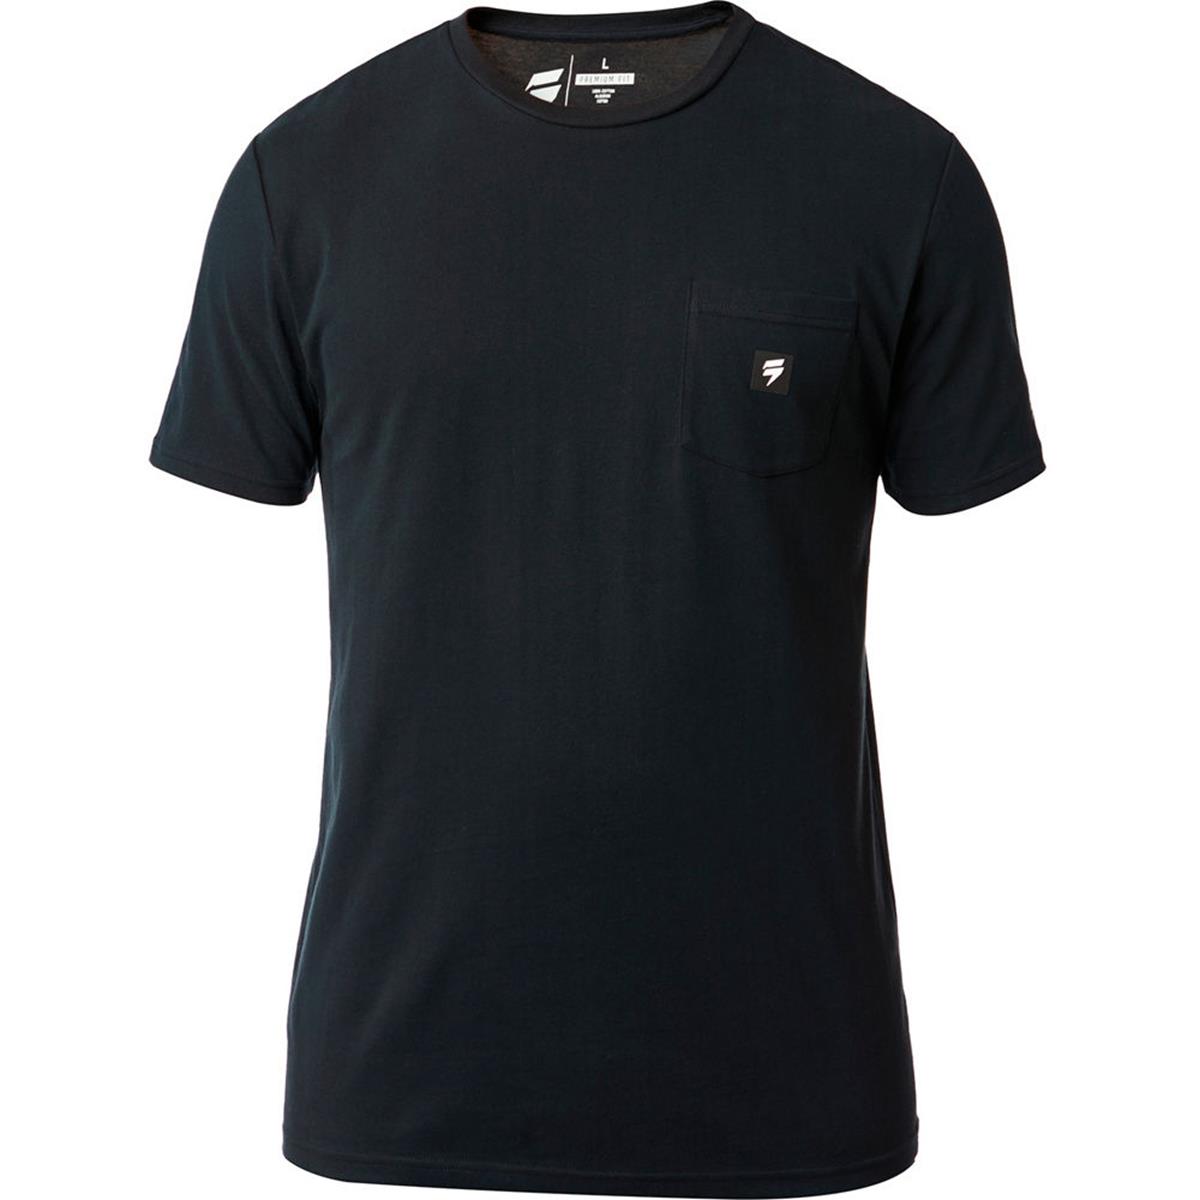 Shift T-Shirt 3LUE Label Basalt Nero - Limited Edition